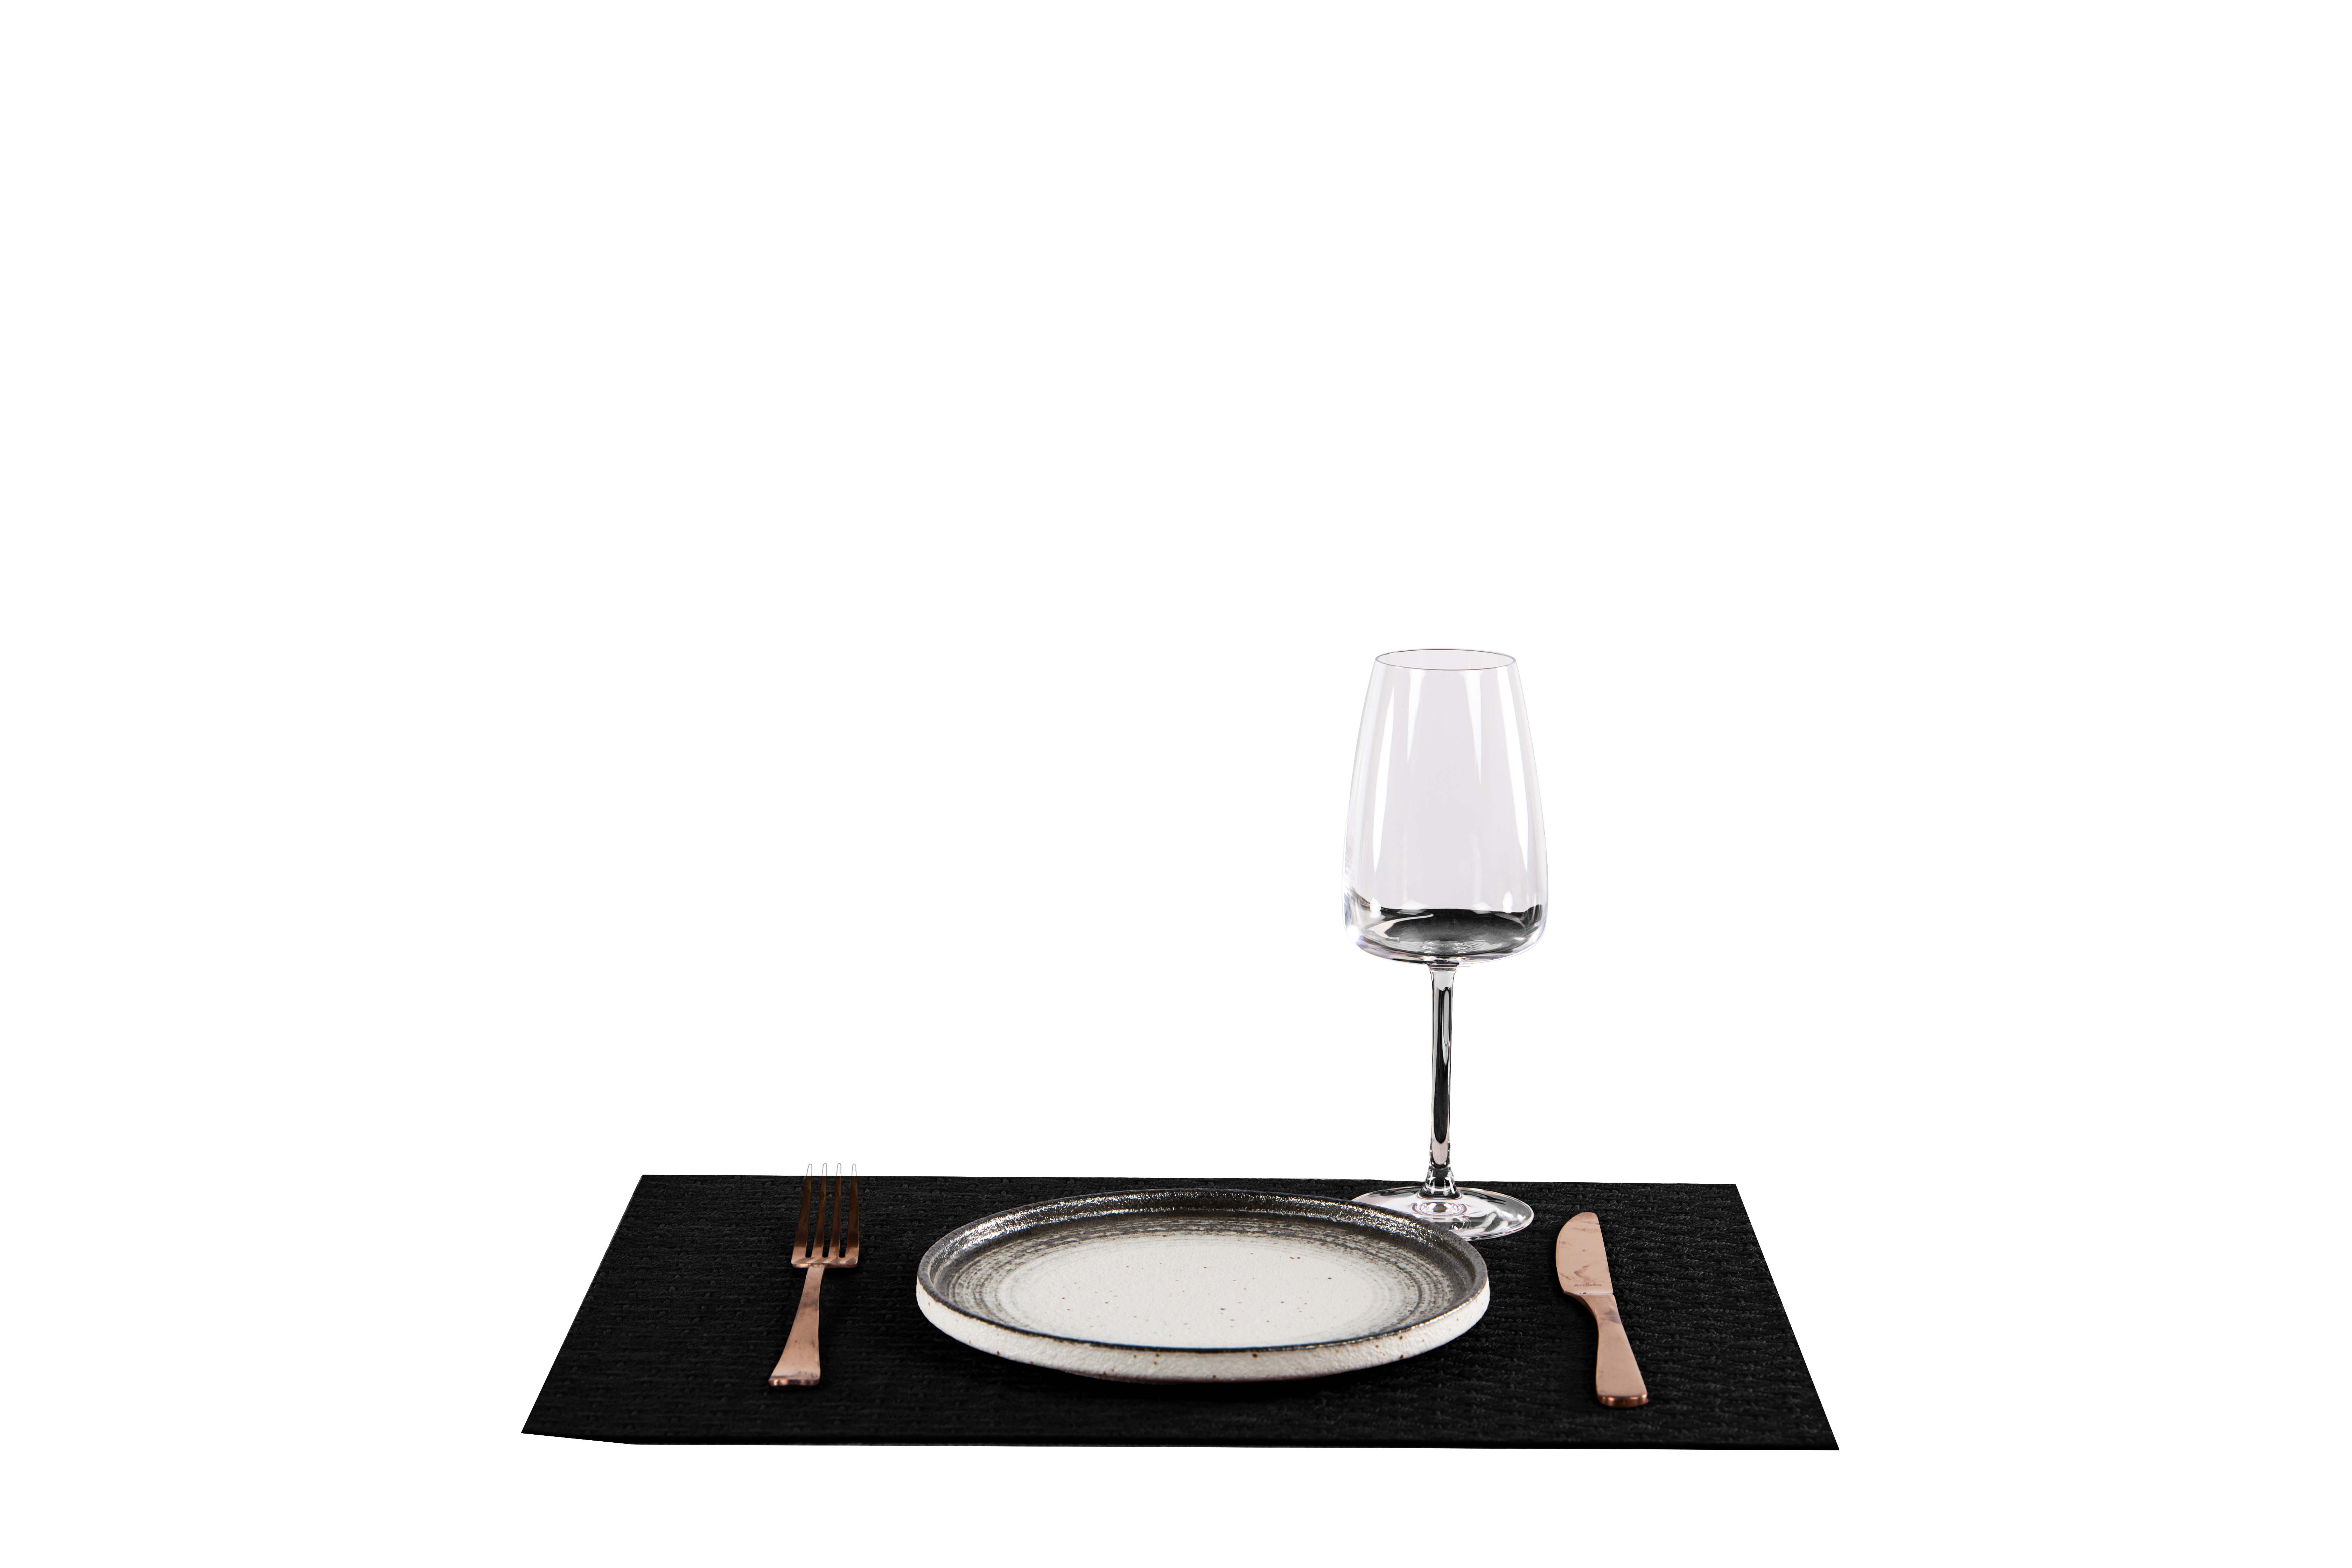 Set de table ARBIN - Leather look imitation - 45x33cm, black